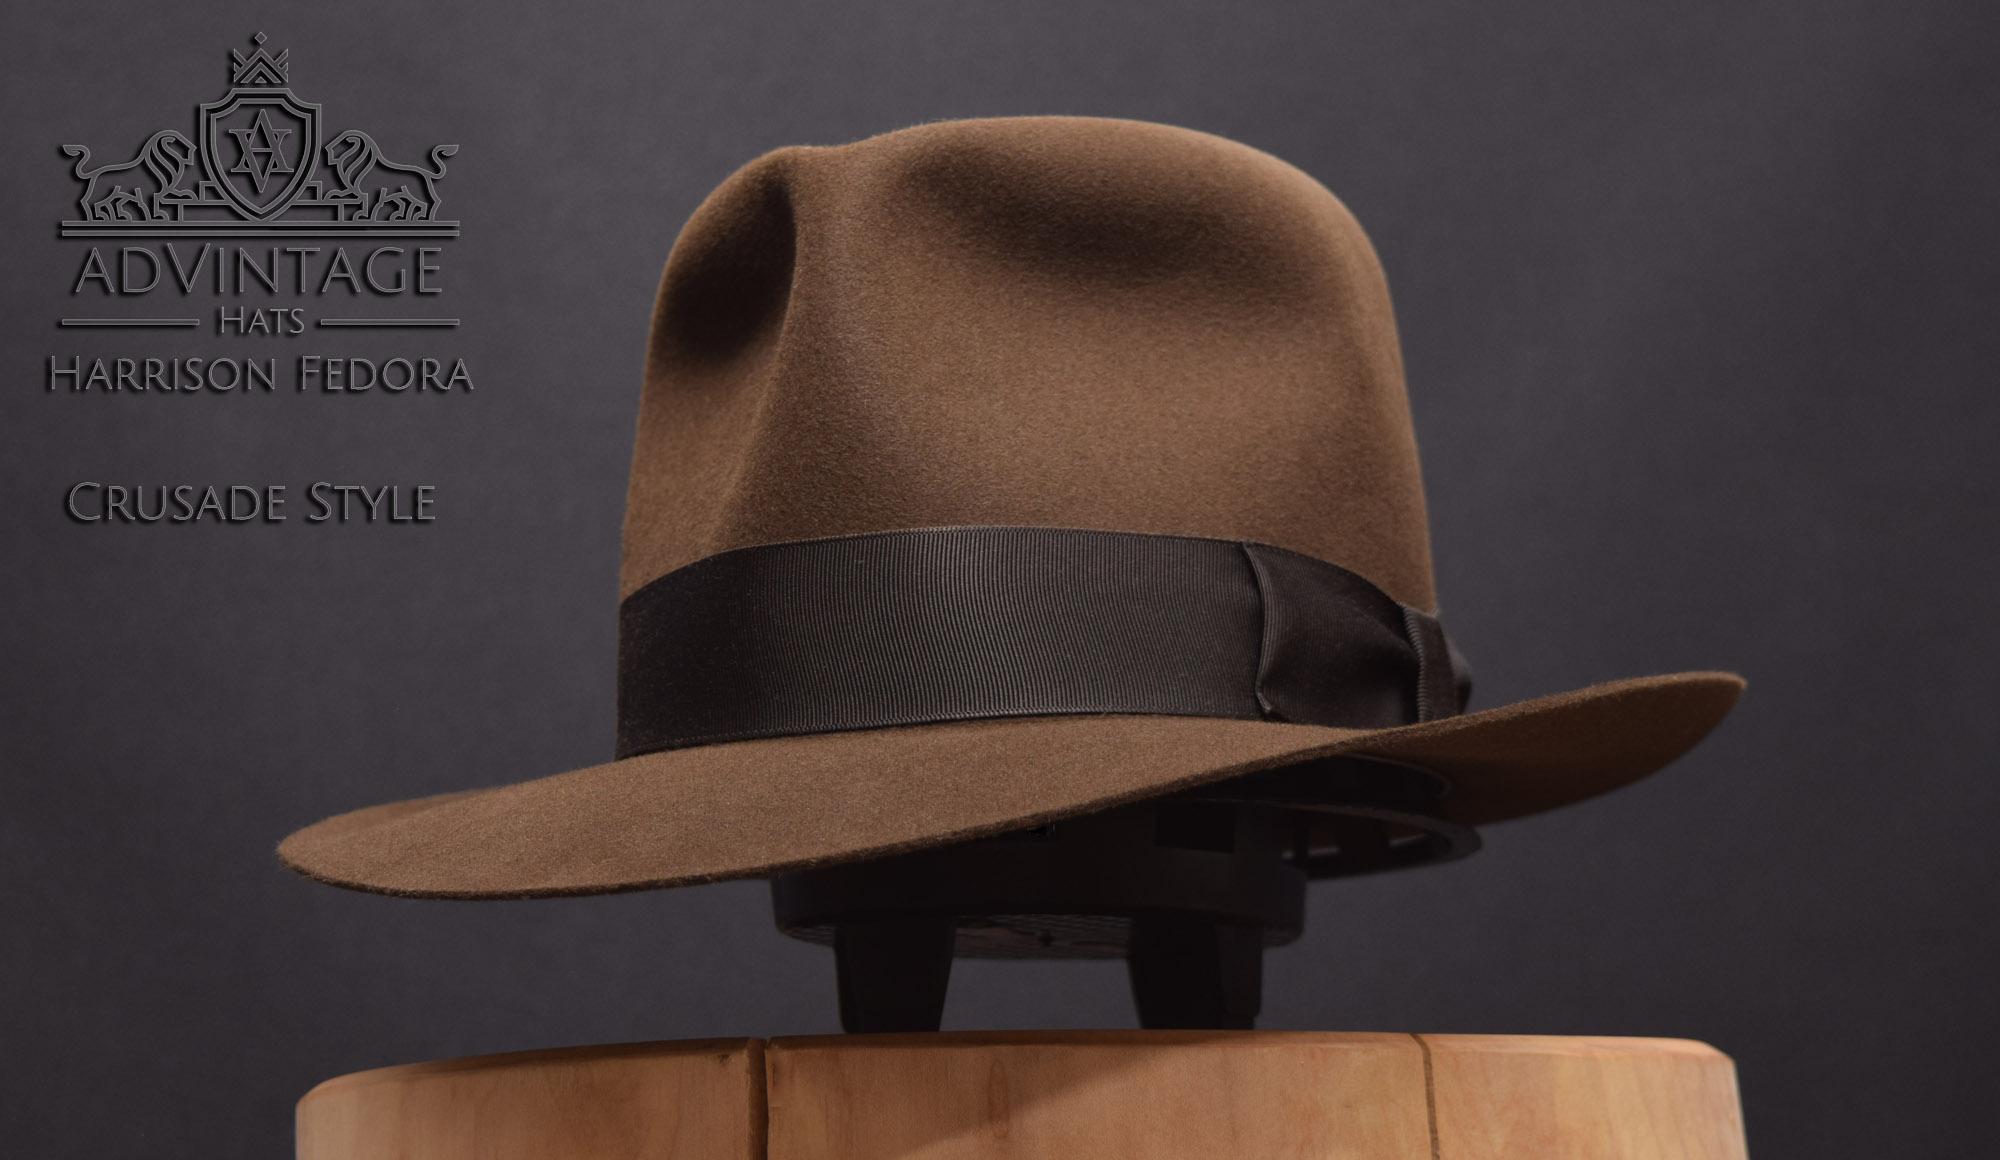 Harrison Fedora Hat - 100% Rabbit fur felt - Old Sable